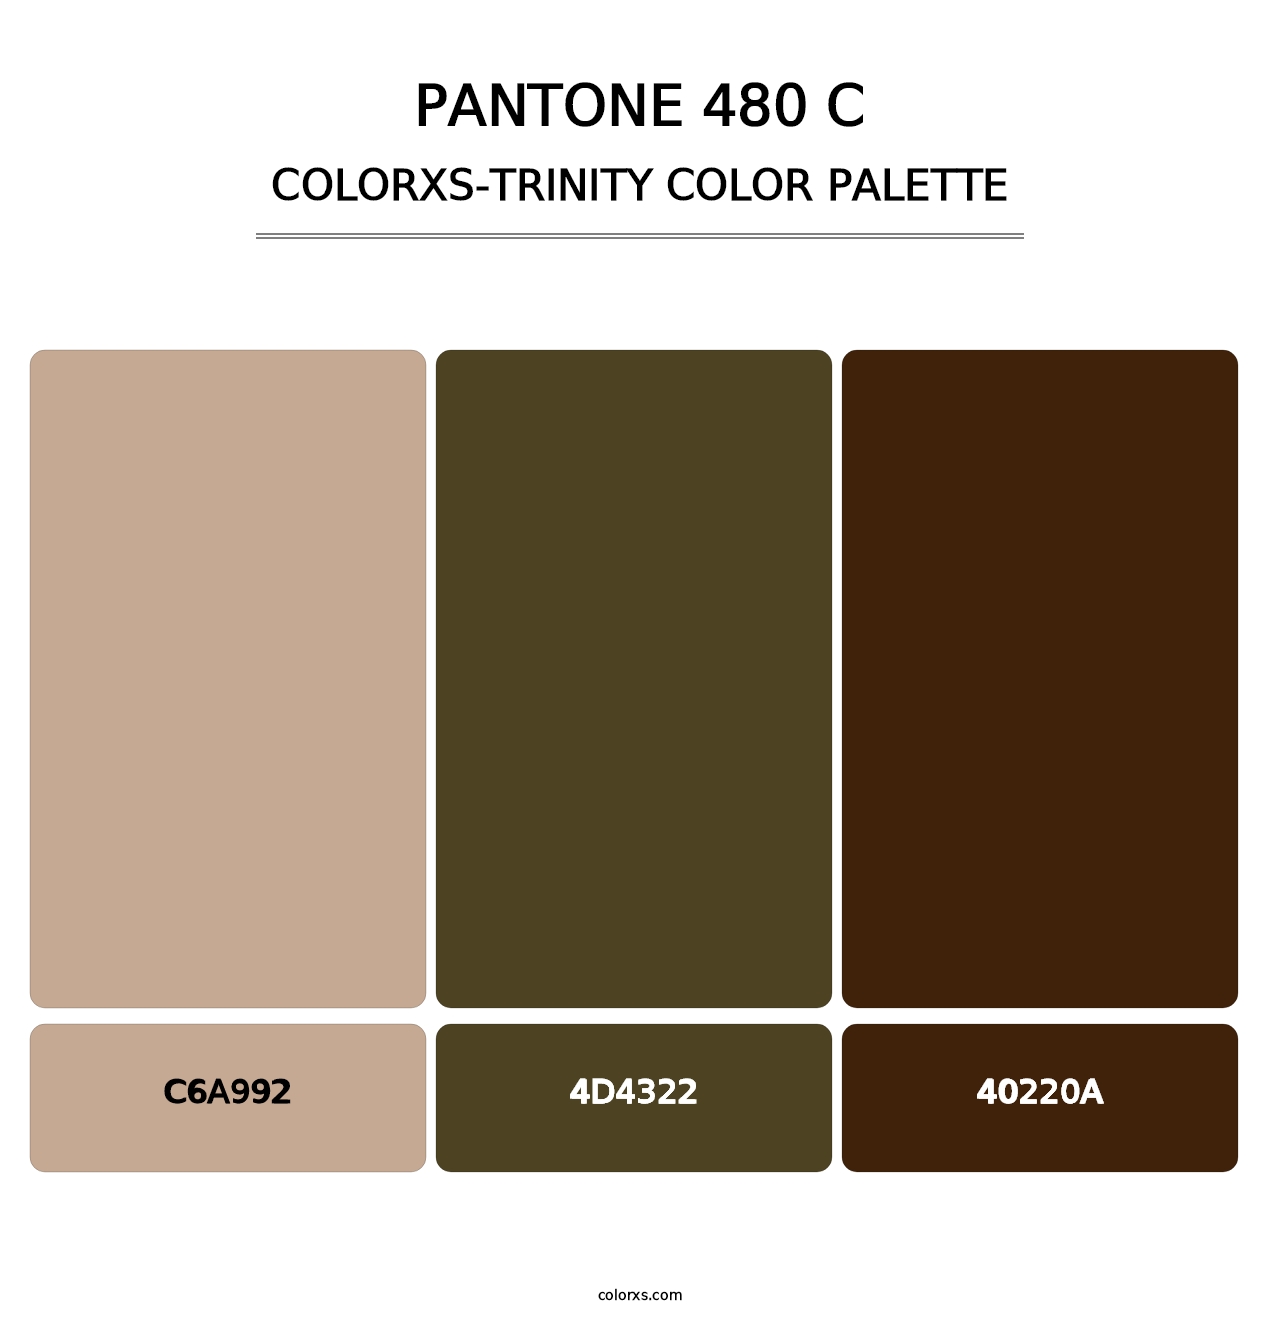 PANTONE 480 C - Colorxs Trinity Palette